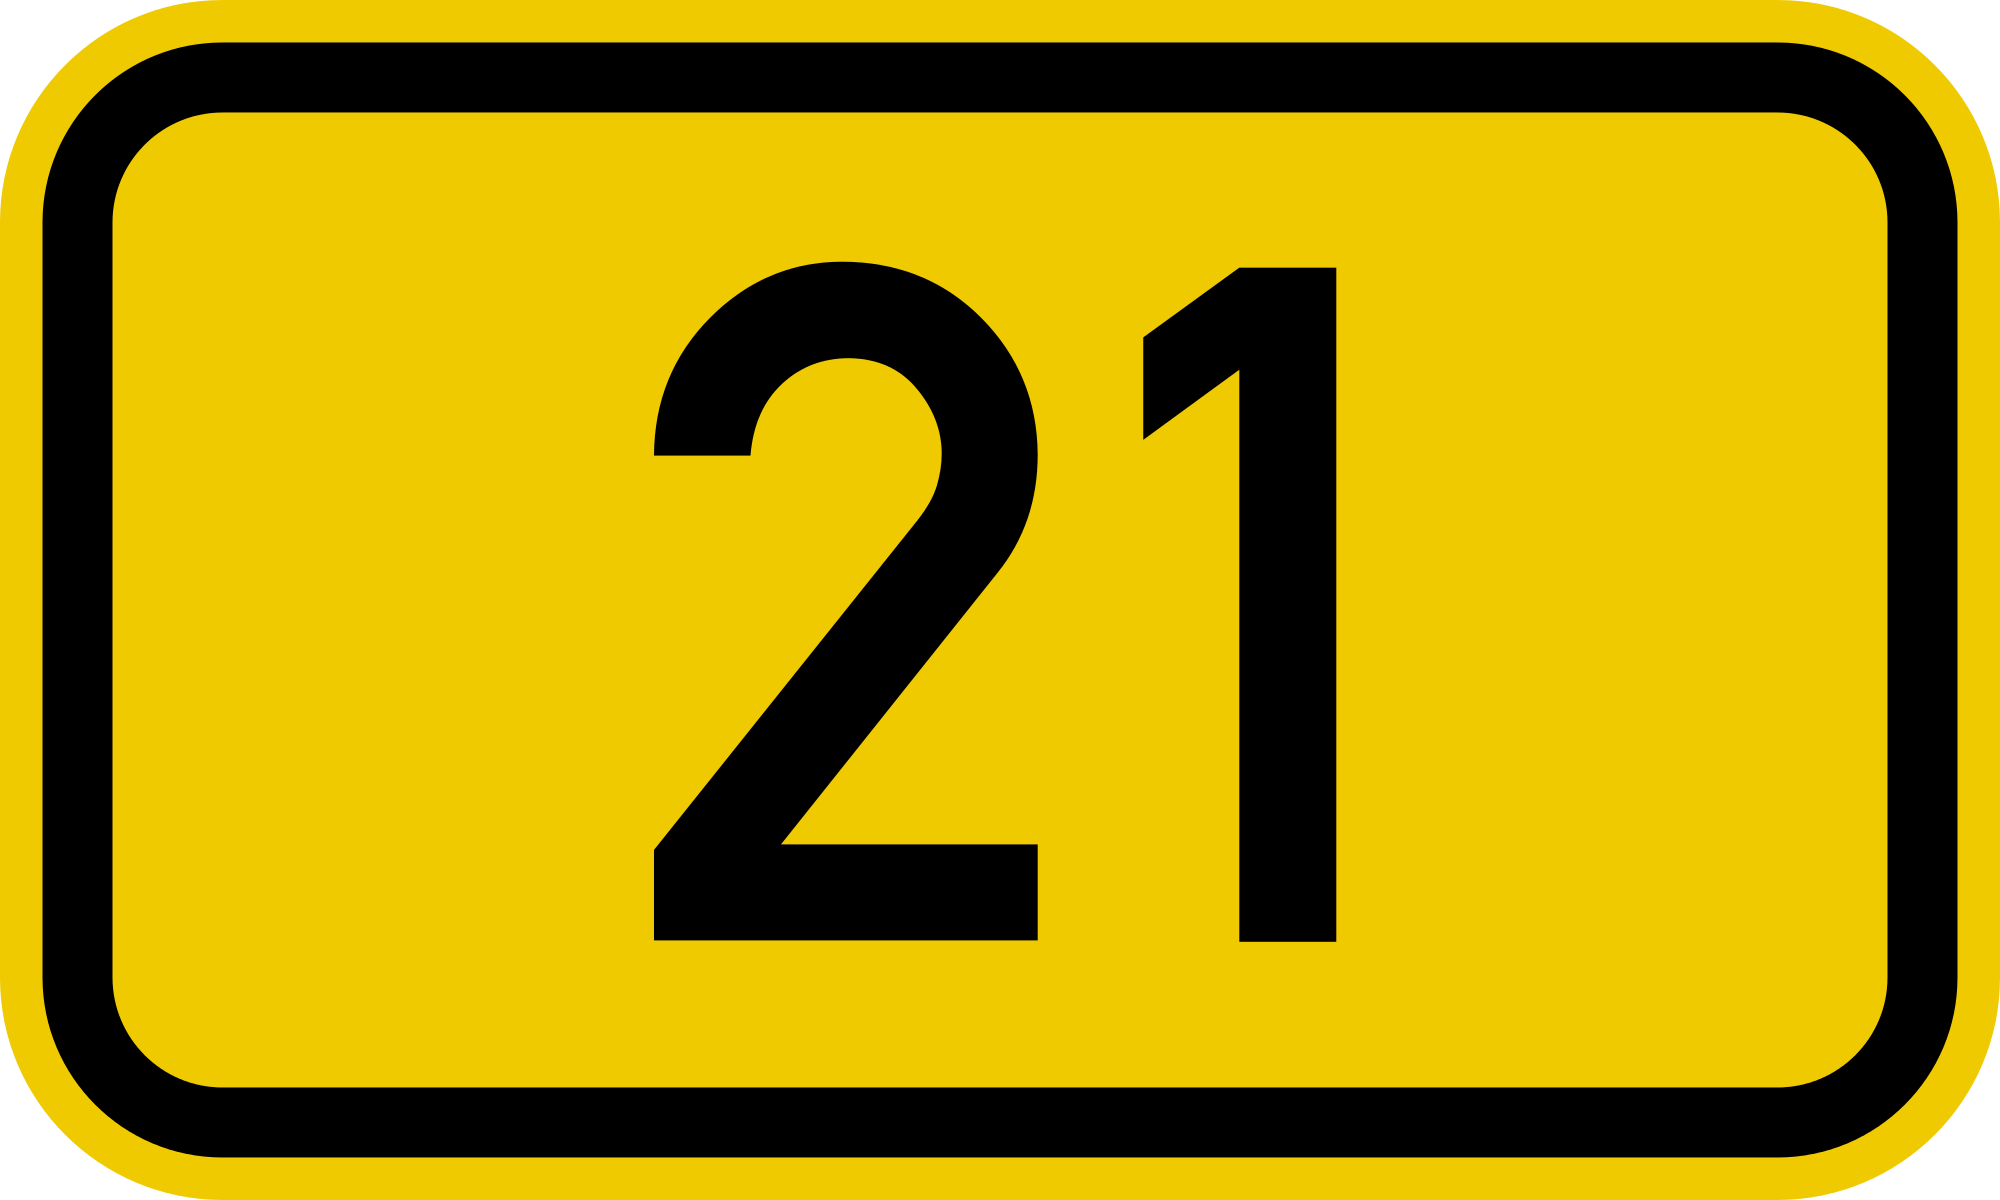 File:Bundesstraße 21 number.svg - Wikimedia Commons